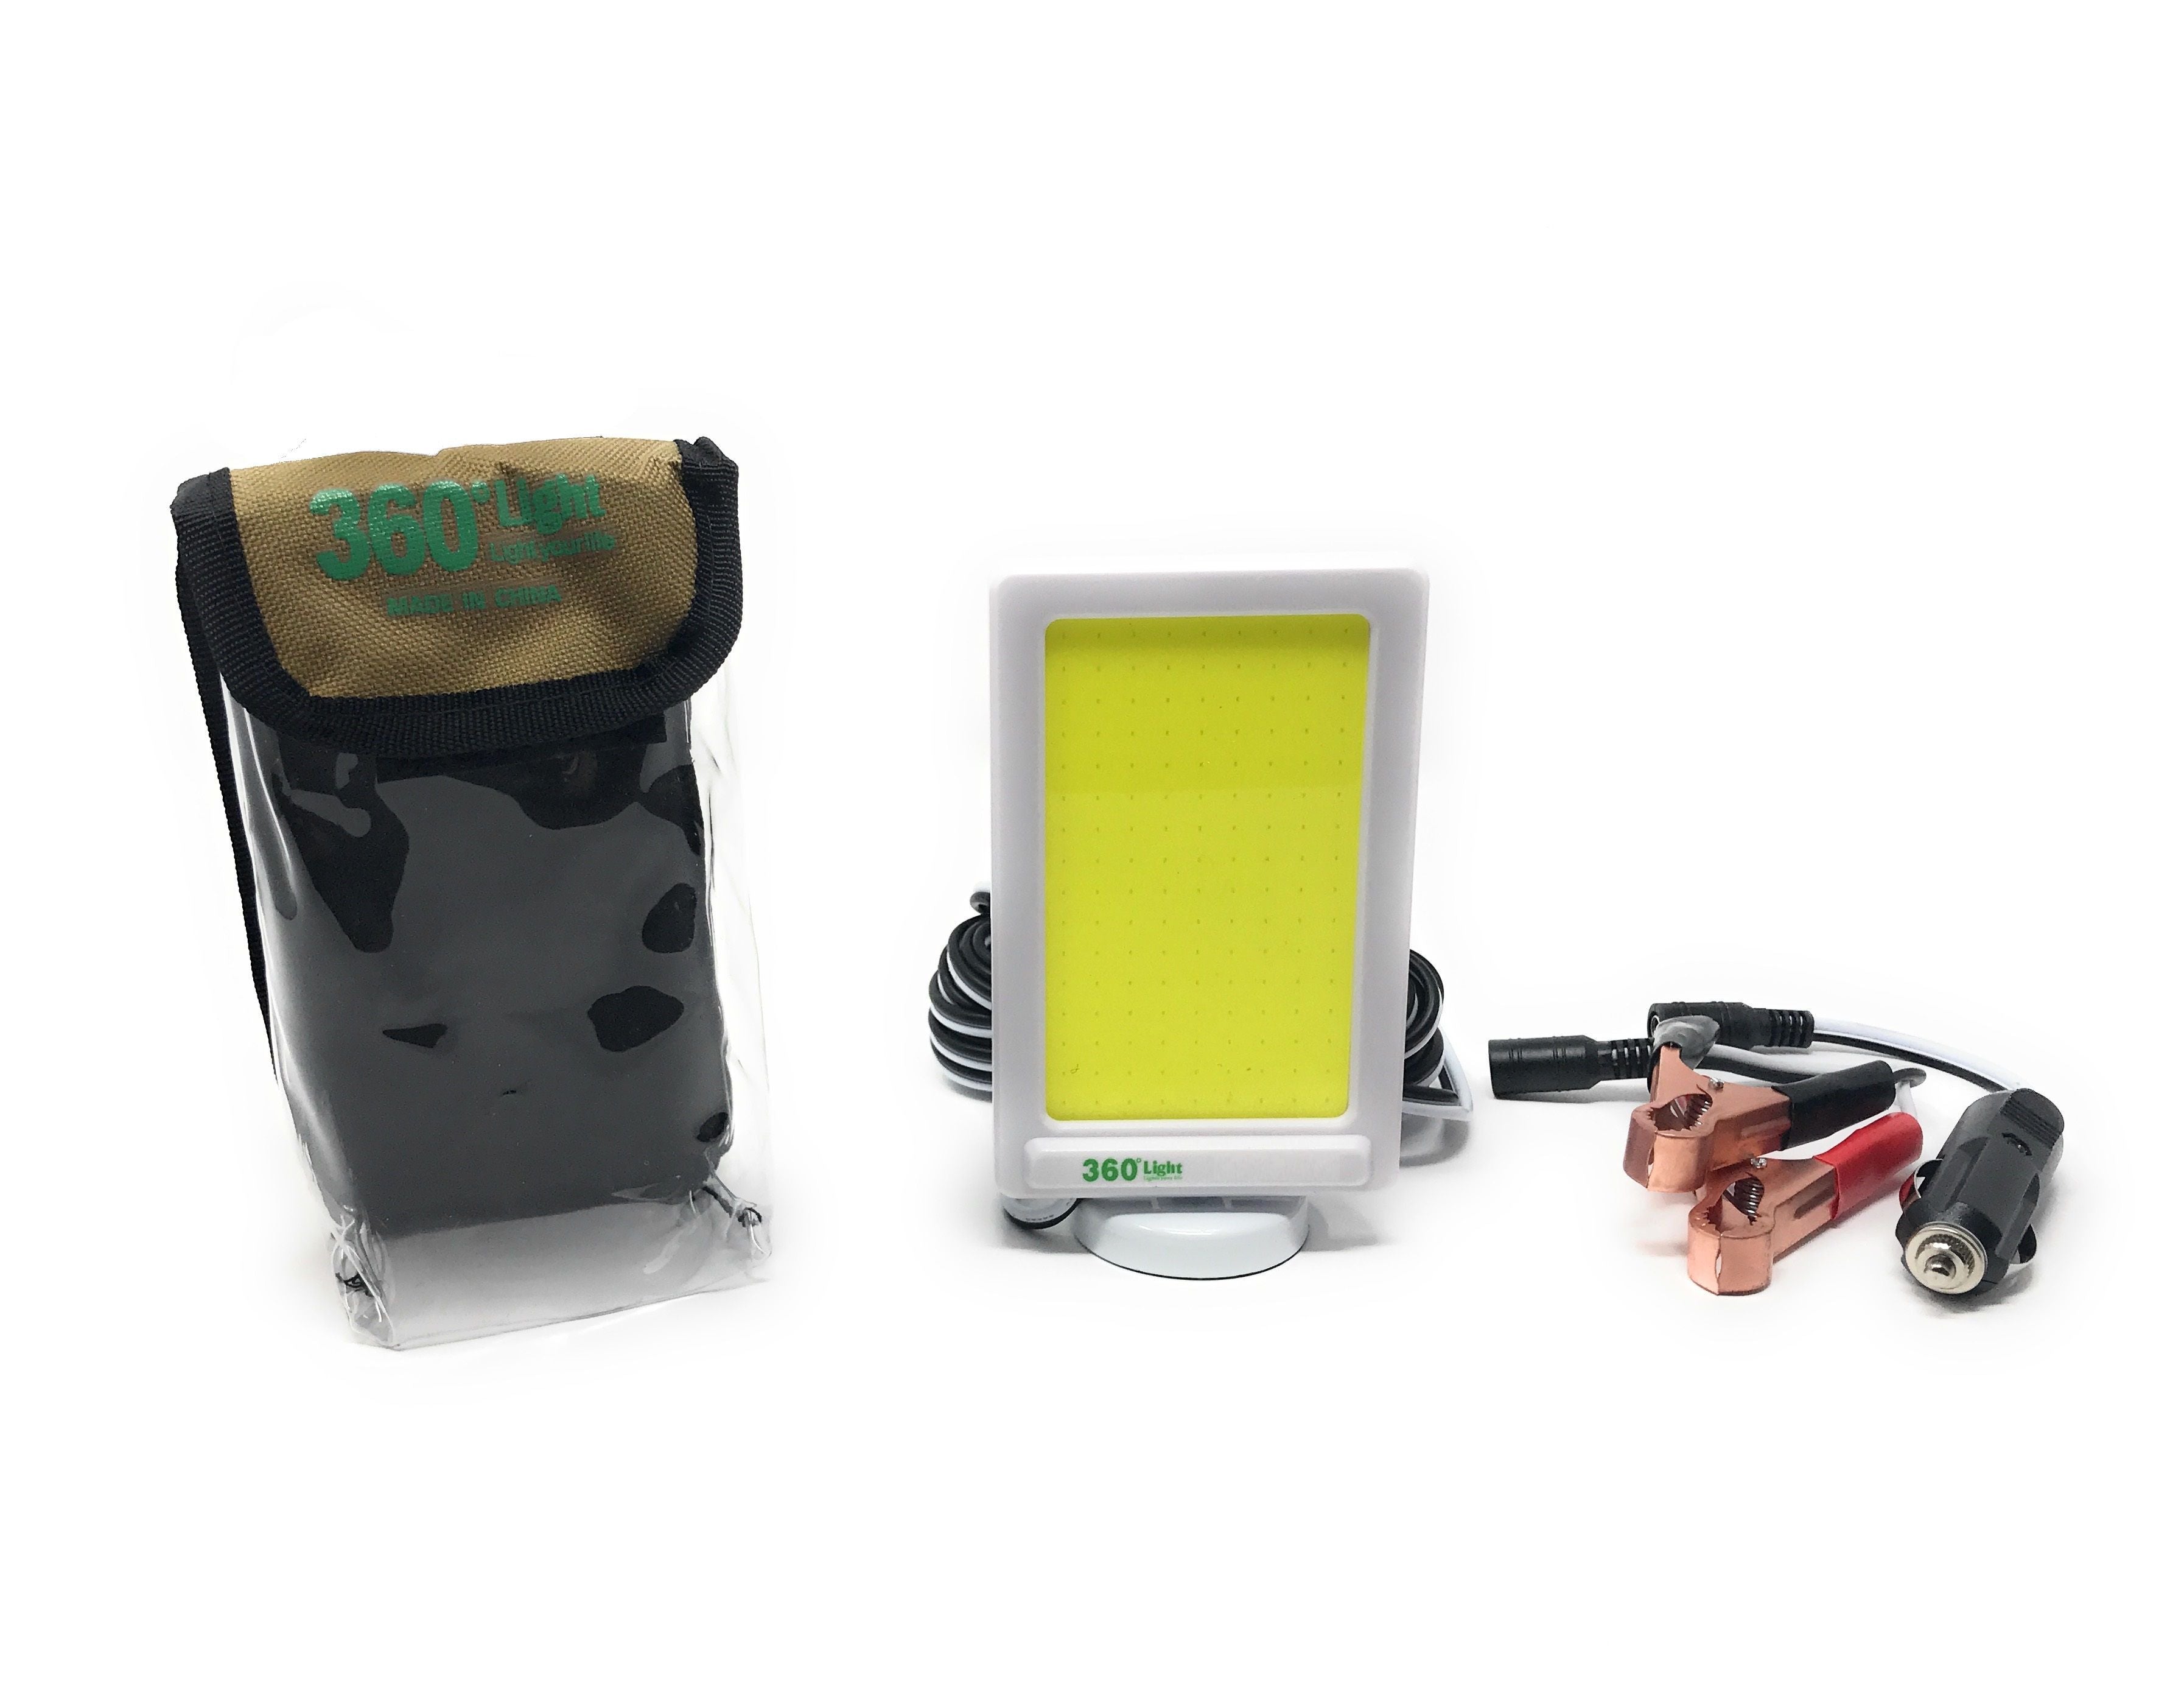 Ultra Bright COB LED Light Kit for Outdoors or Emergency Light - 12VDC-Canadian Marine &amp; Outdoor Equipment